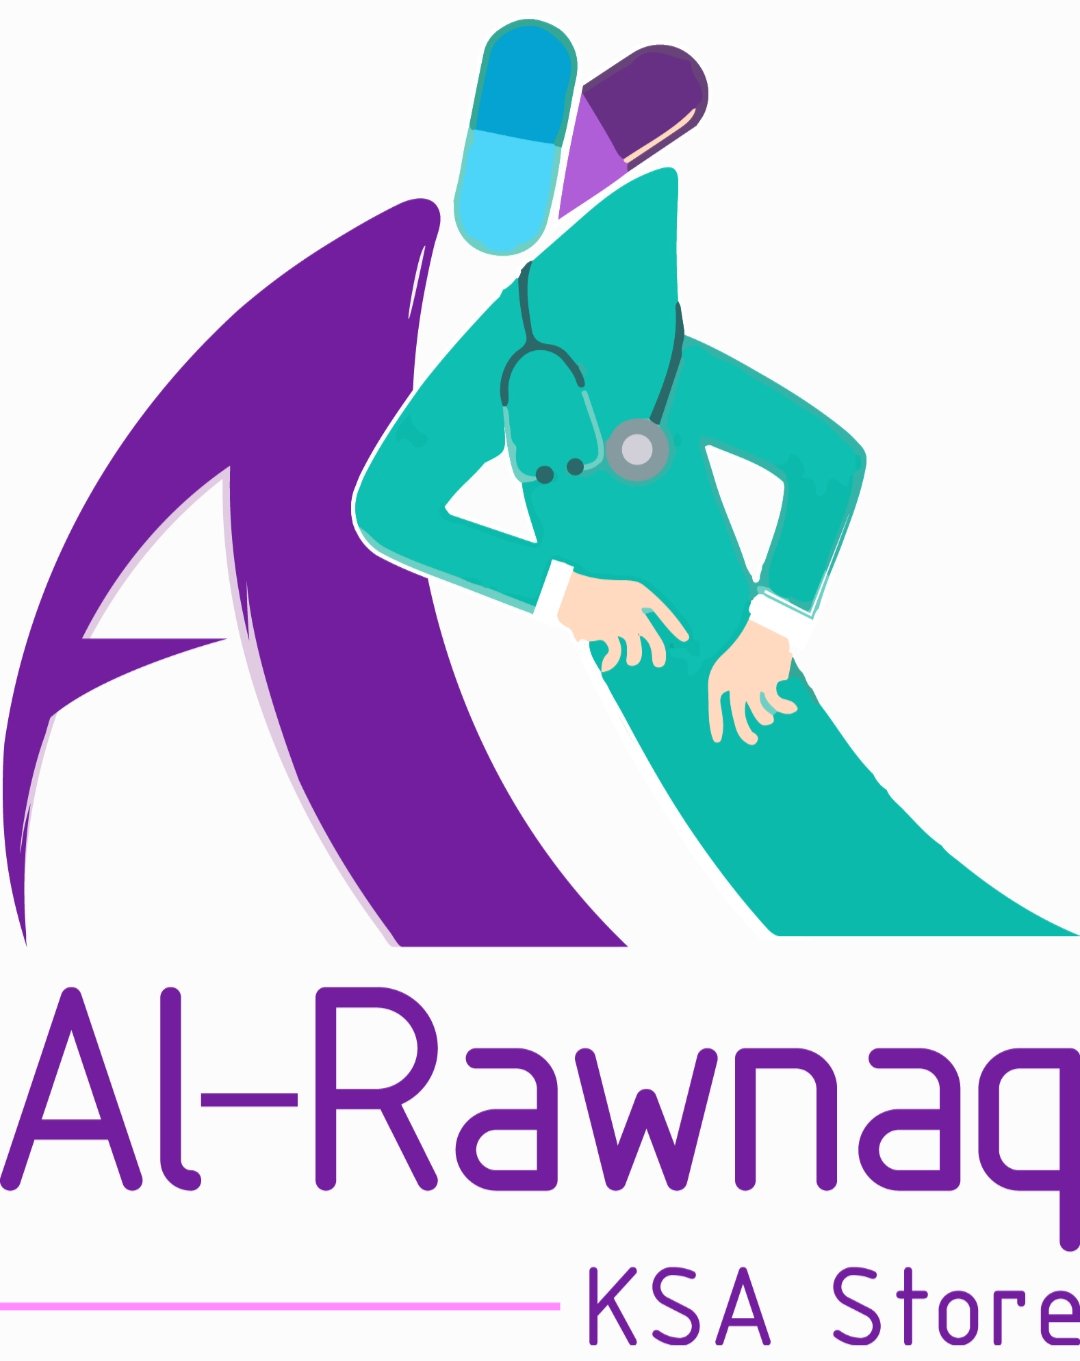 متجر الرونقAl Rawnaq KSA Store